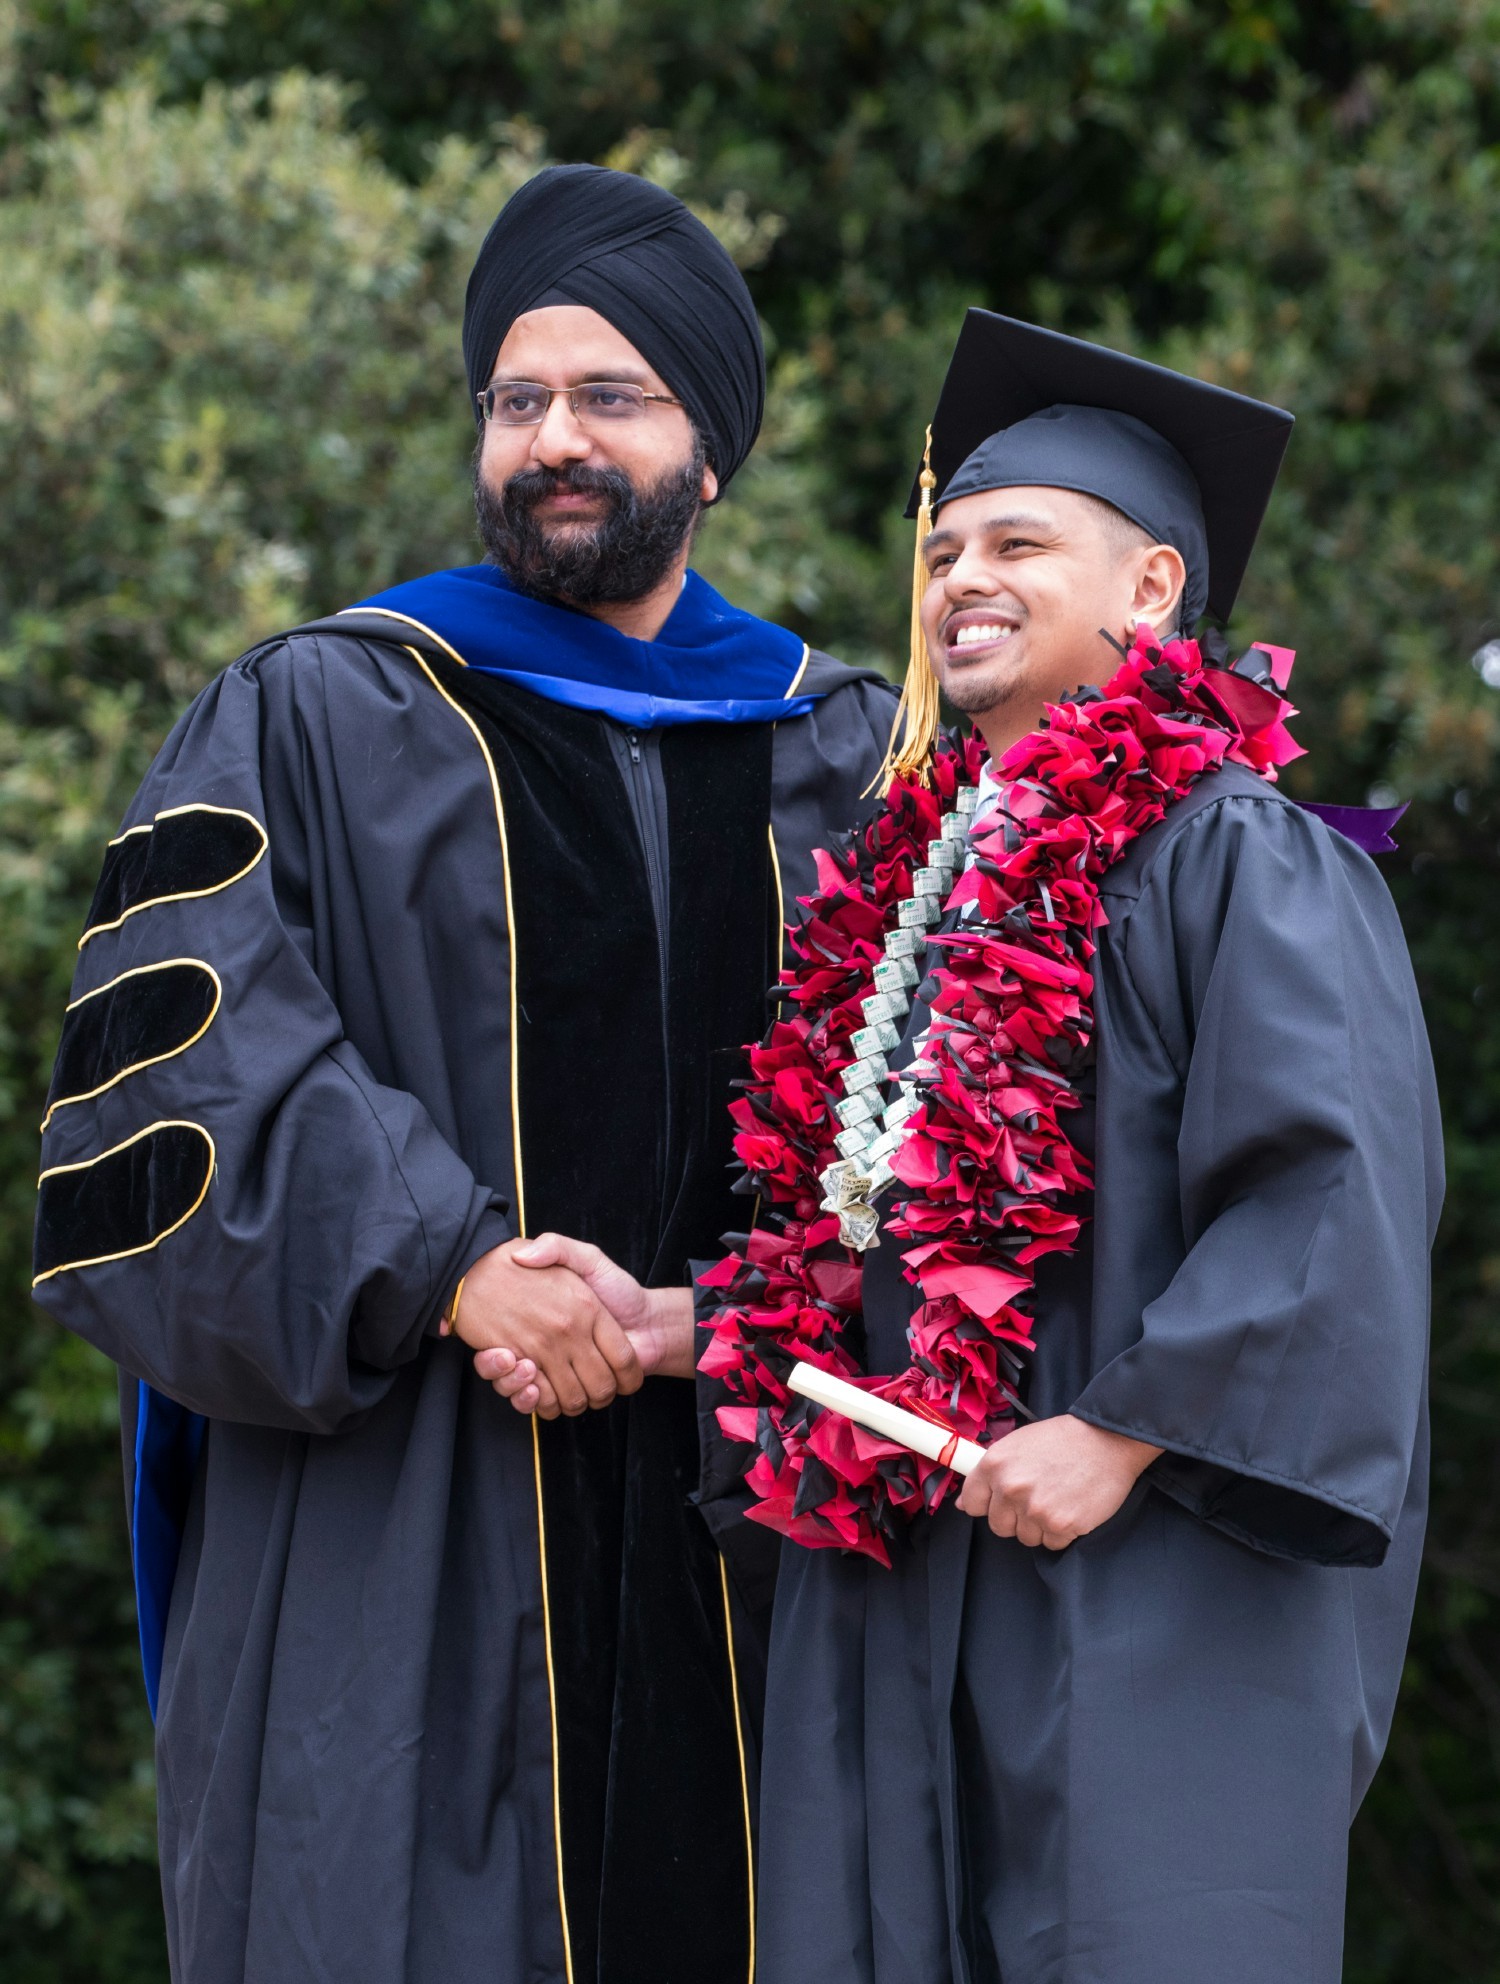 Graduation Ceremonies – Receiving Certificates/Diplomas